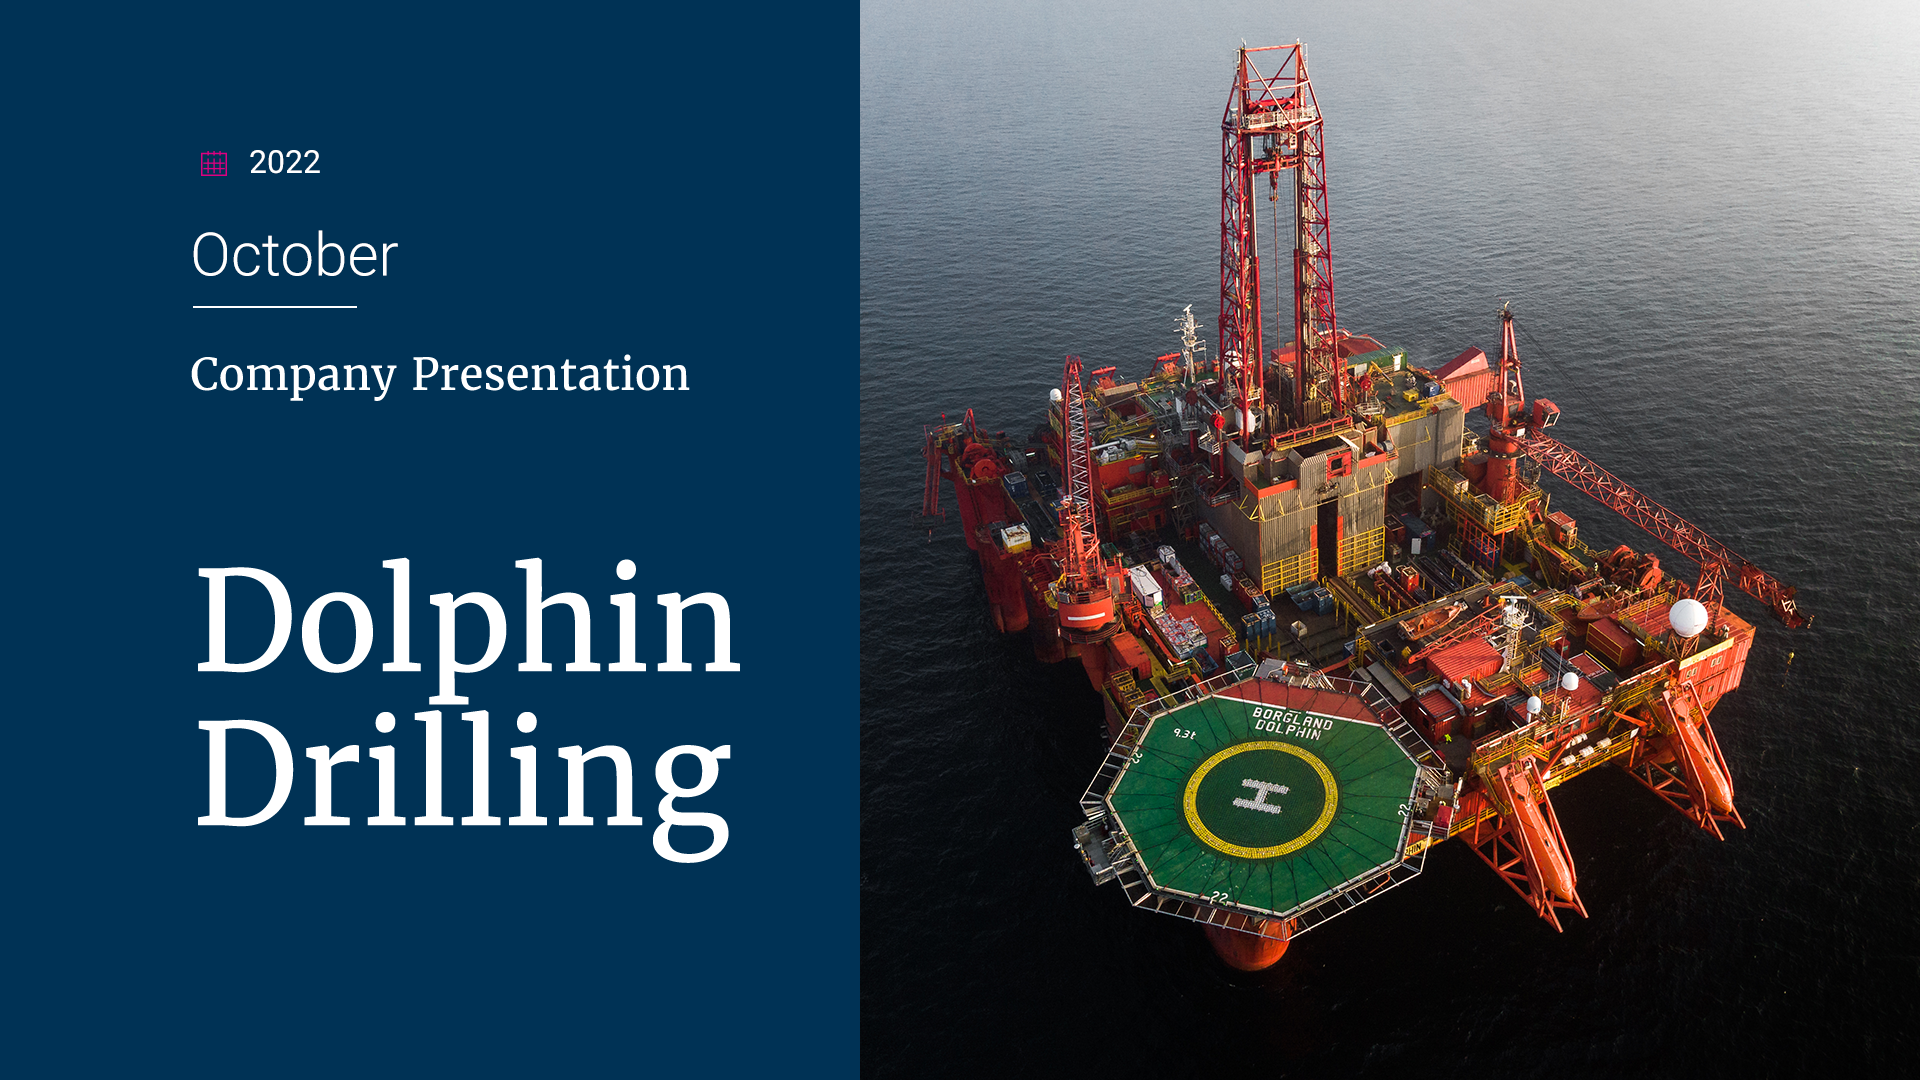 Dolphin Drilling: Company Presentation